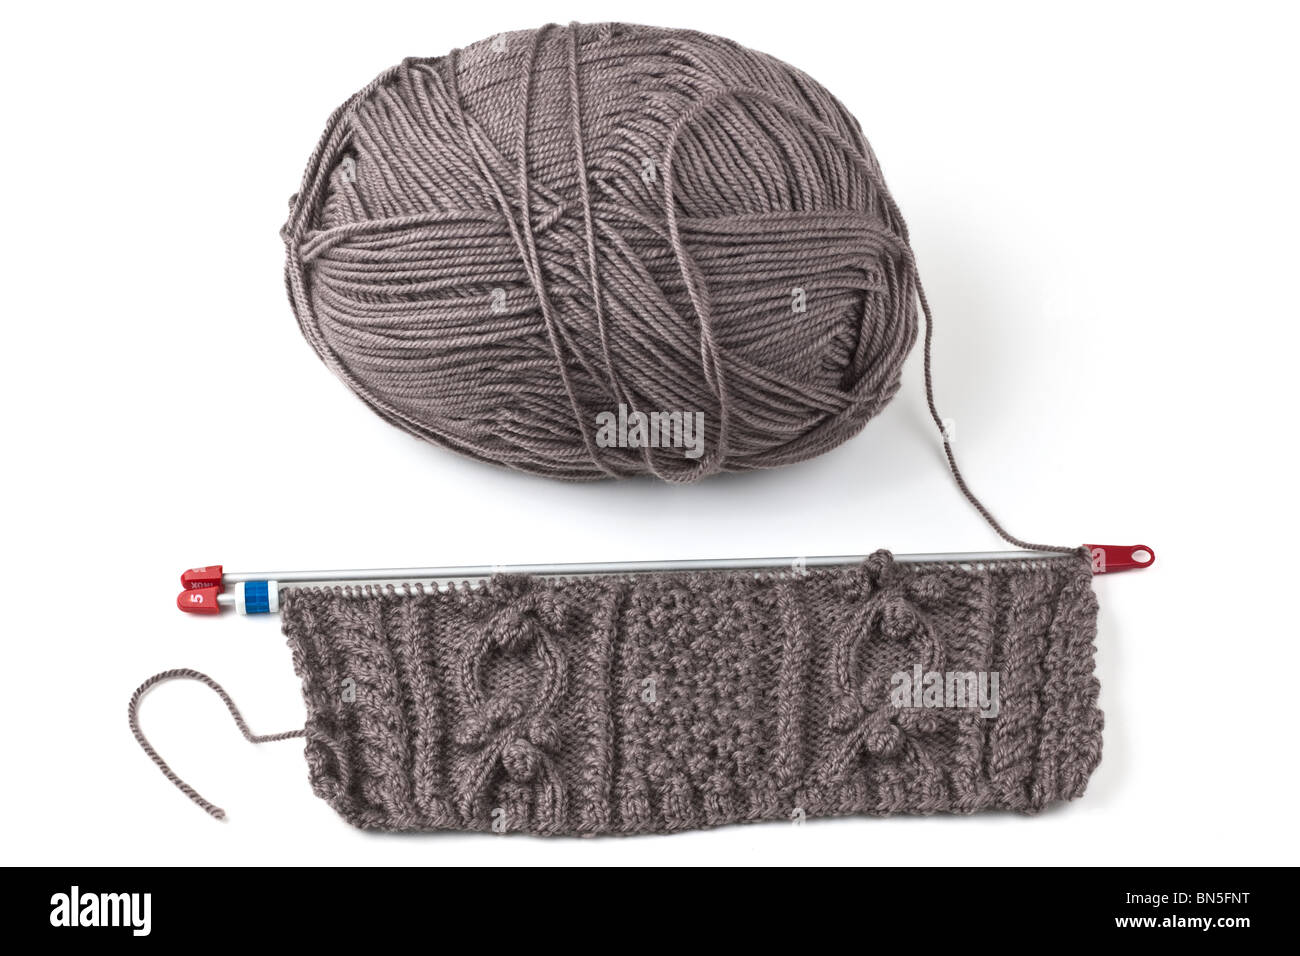 ball of brown wool and aran pattern knitting Stock Photo